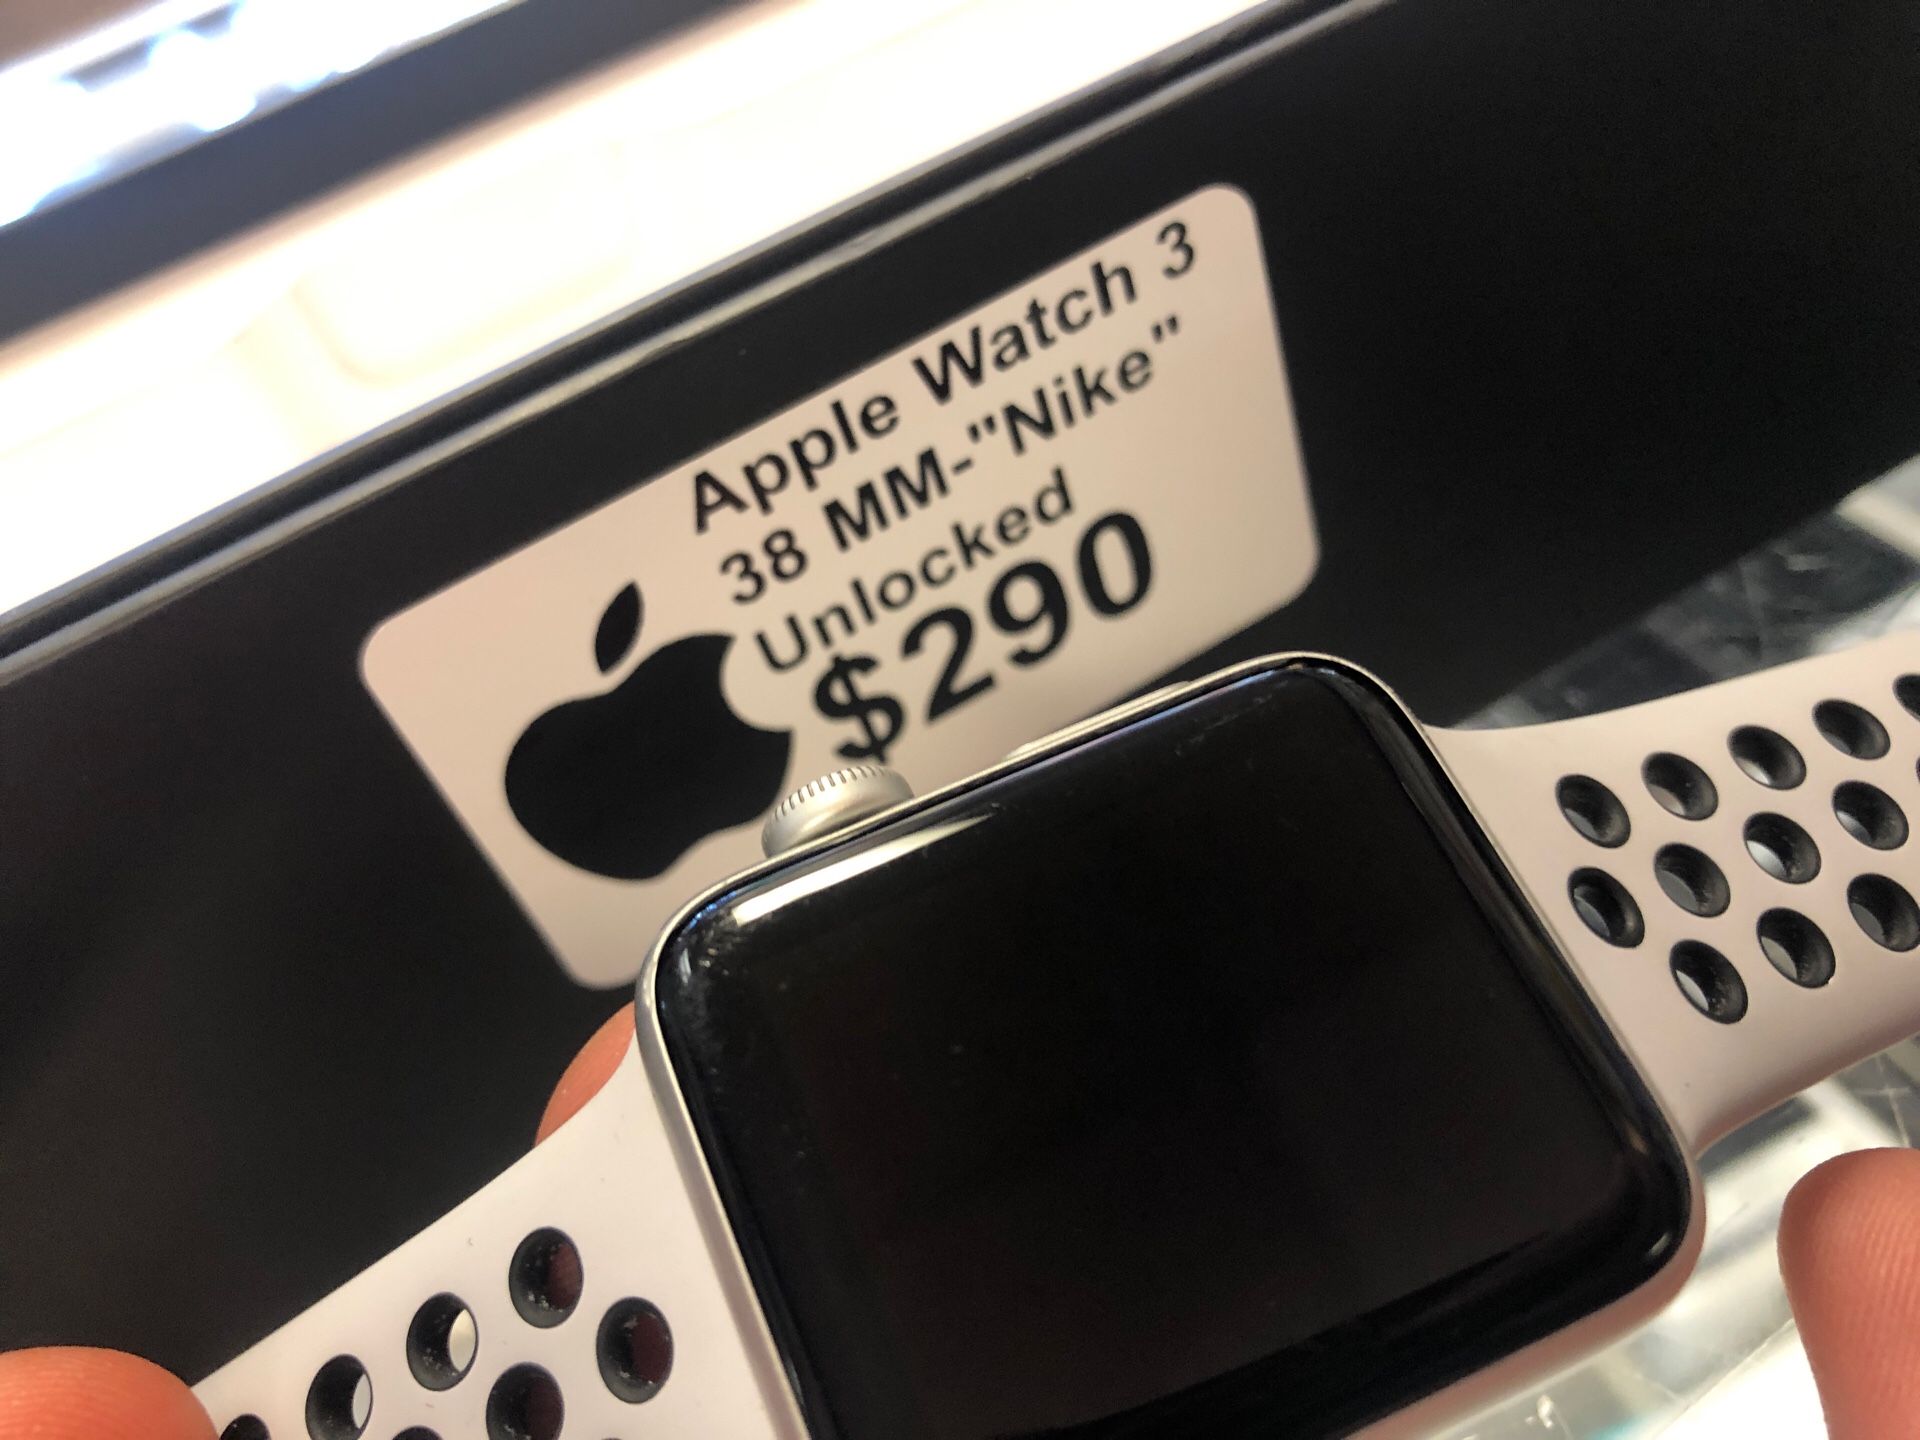 Series 3 Apple Watch Nike- 38MM Unlocked for 290$